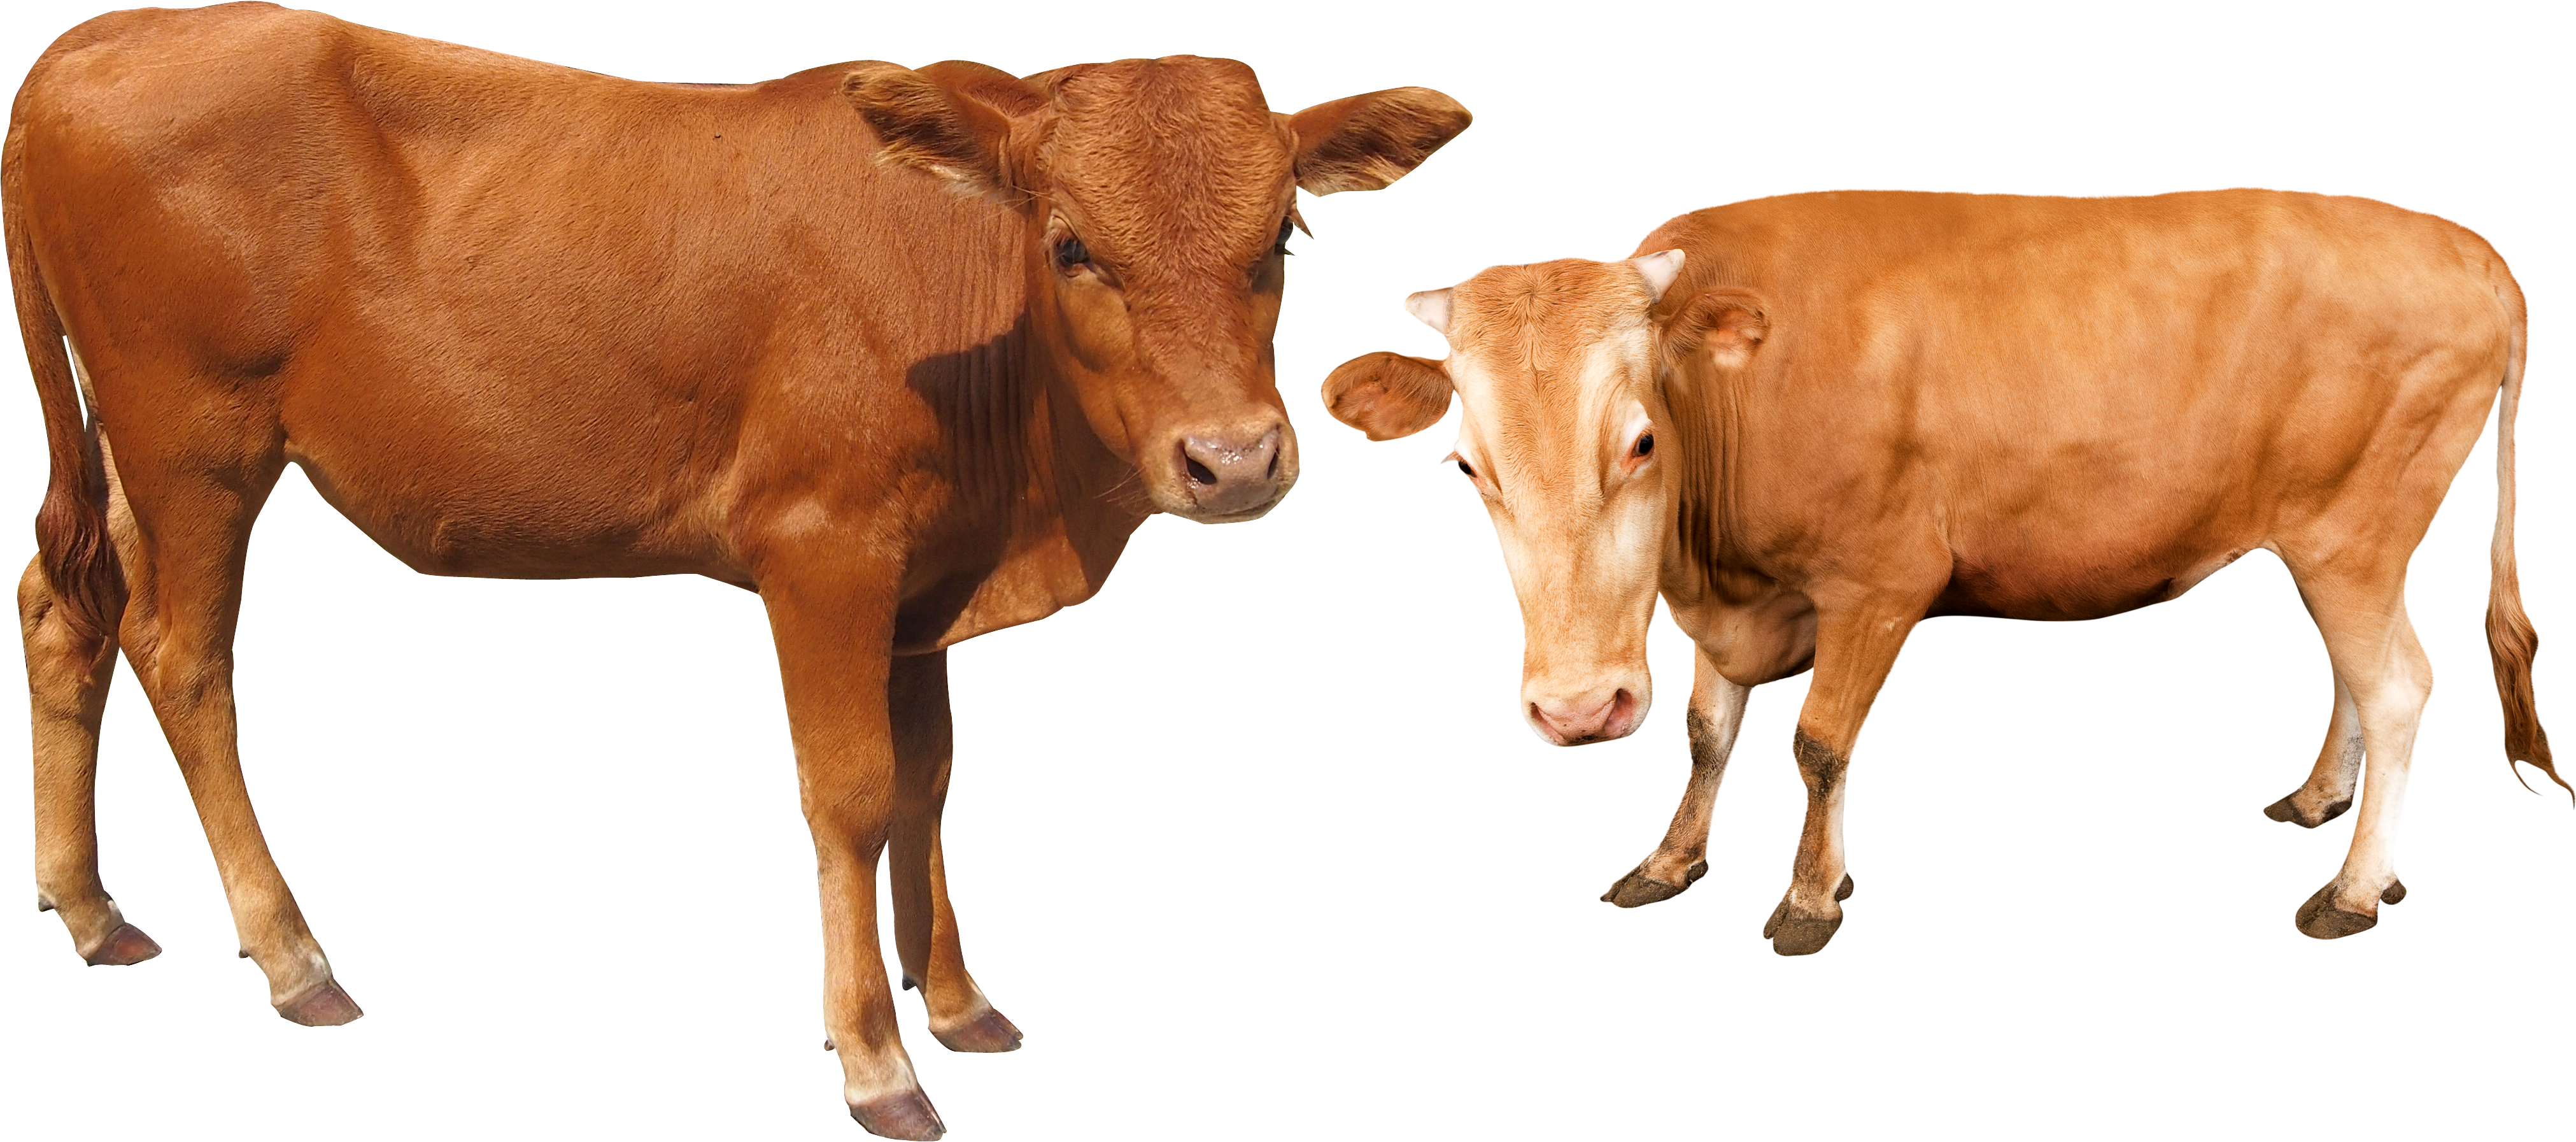 Free Cow Calf Silhouette Download Free Cow Calf Silho - vrogue.co